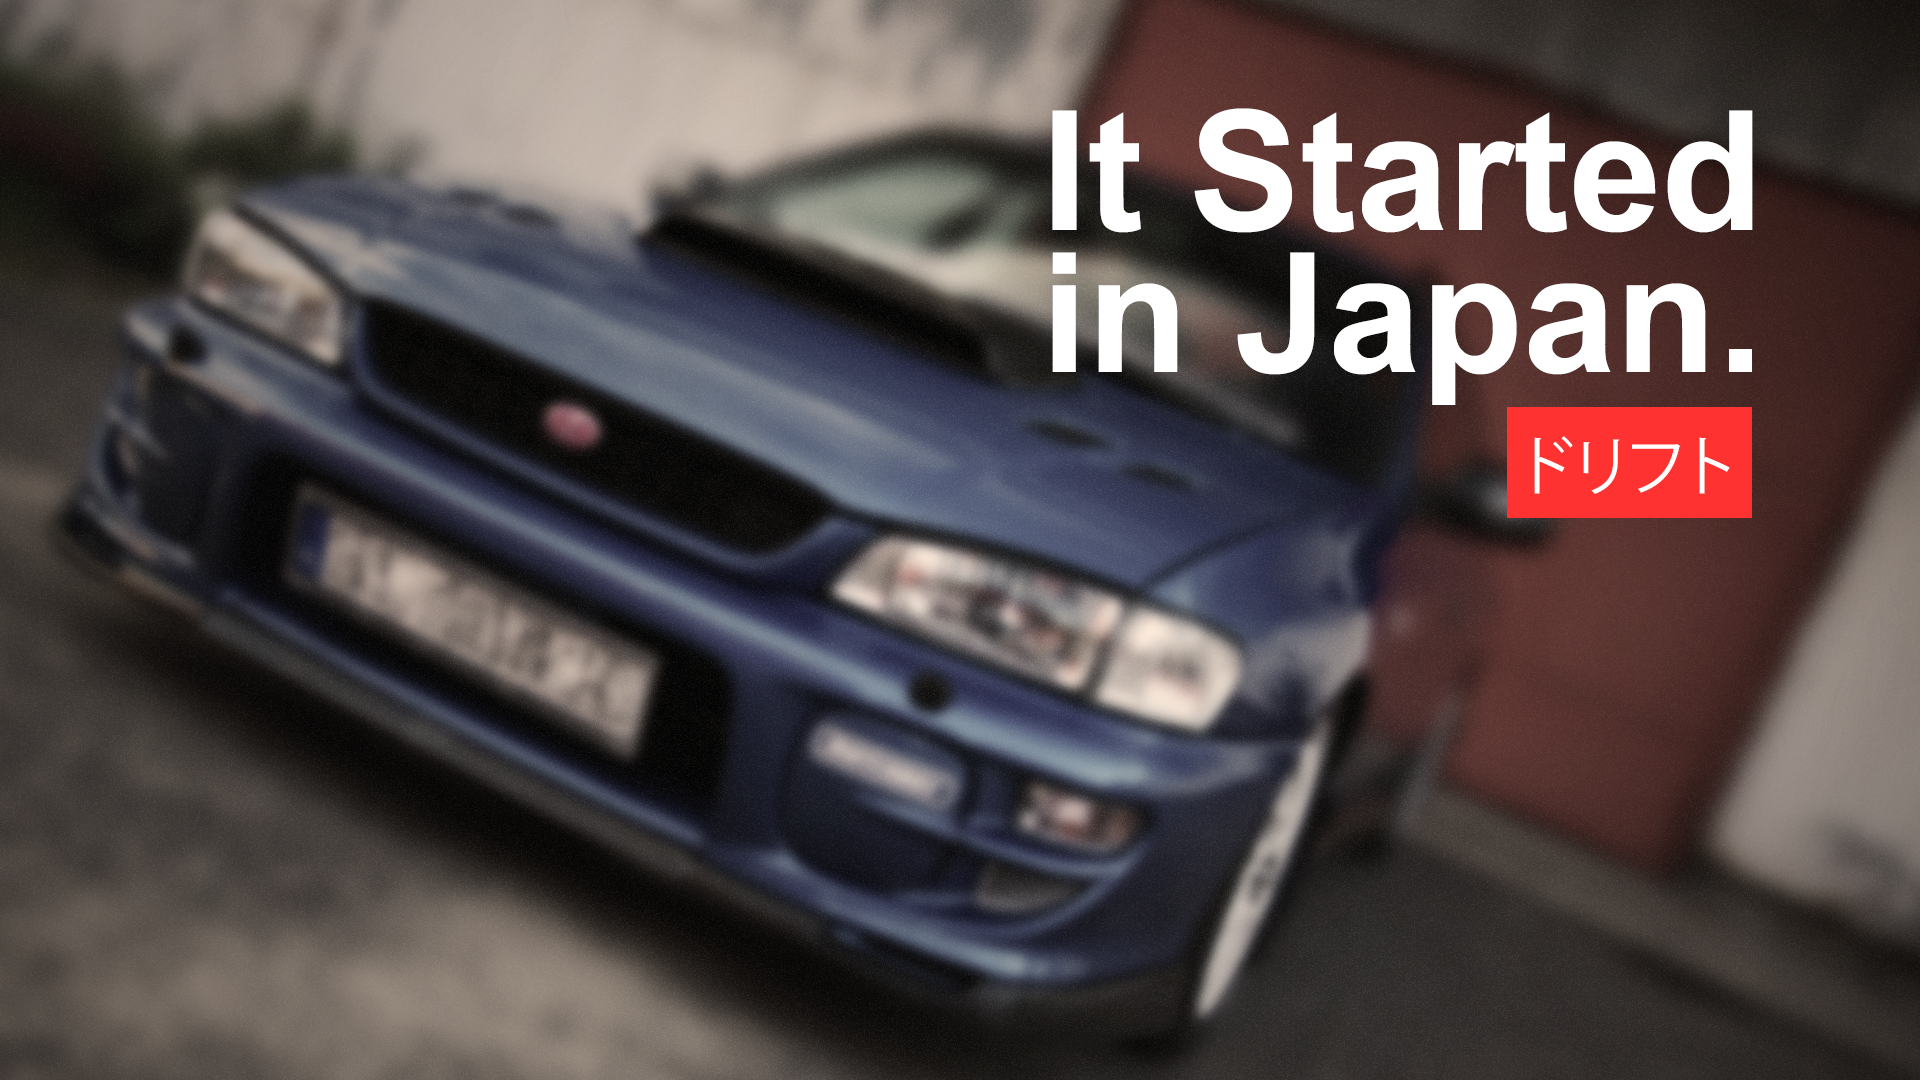 General 1920x1080 car vehicle Japanese cars tuning modified It Started in Japan Subaru Subaru Impreza blue cars